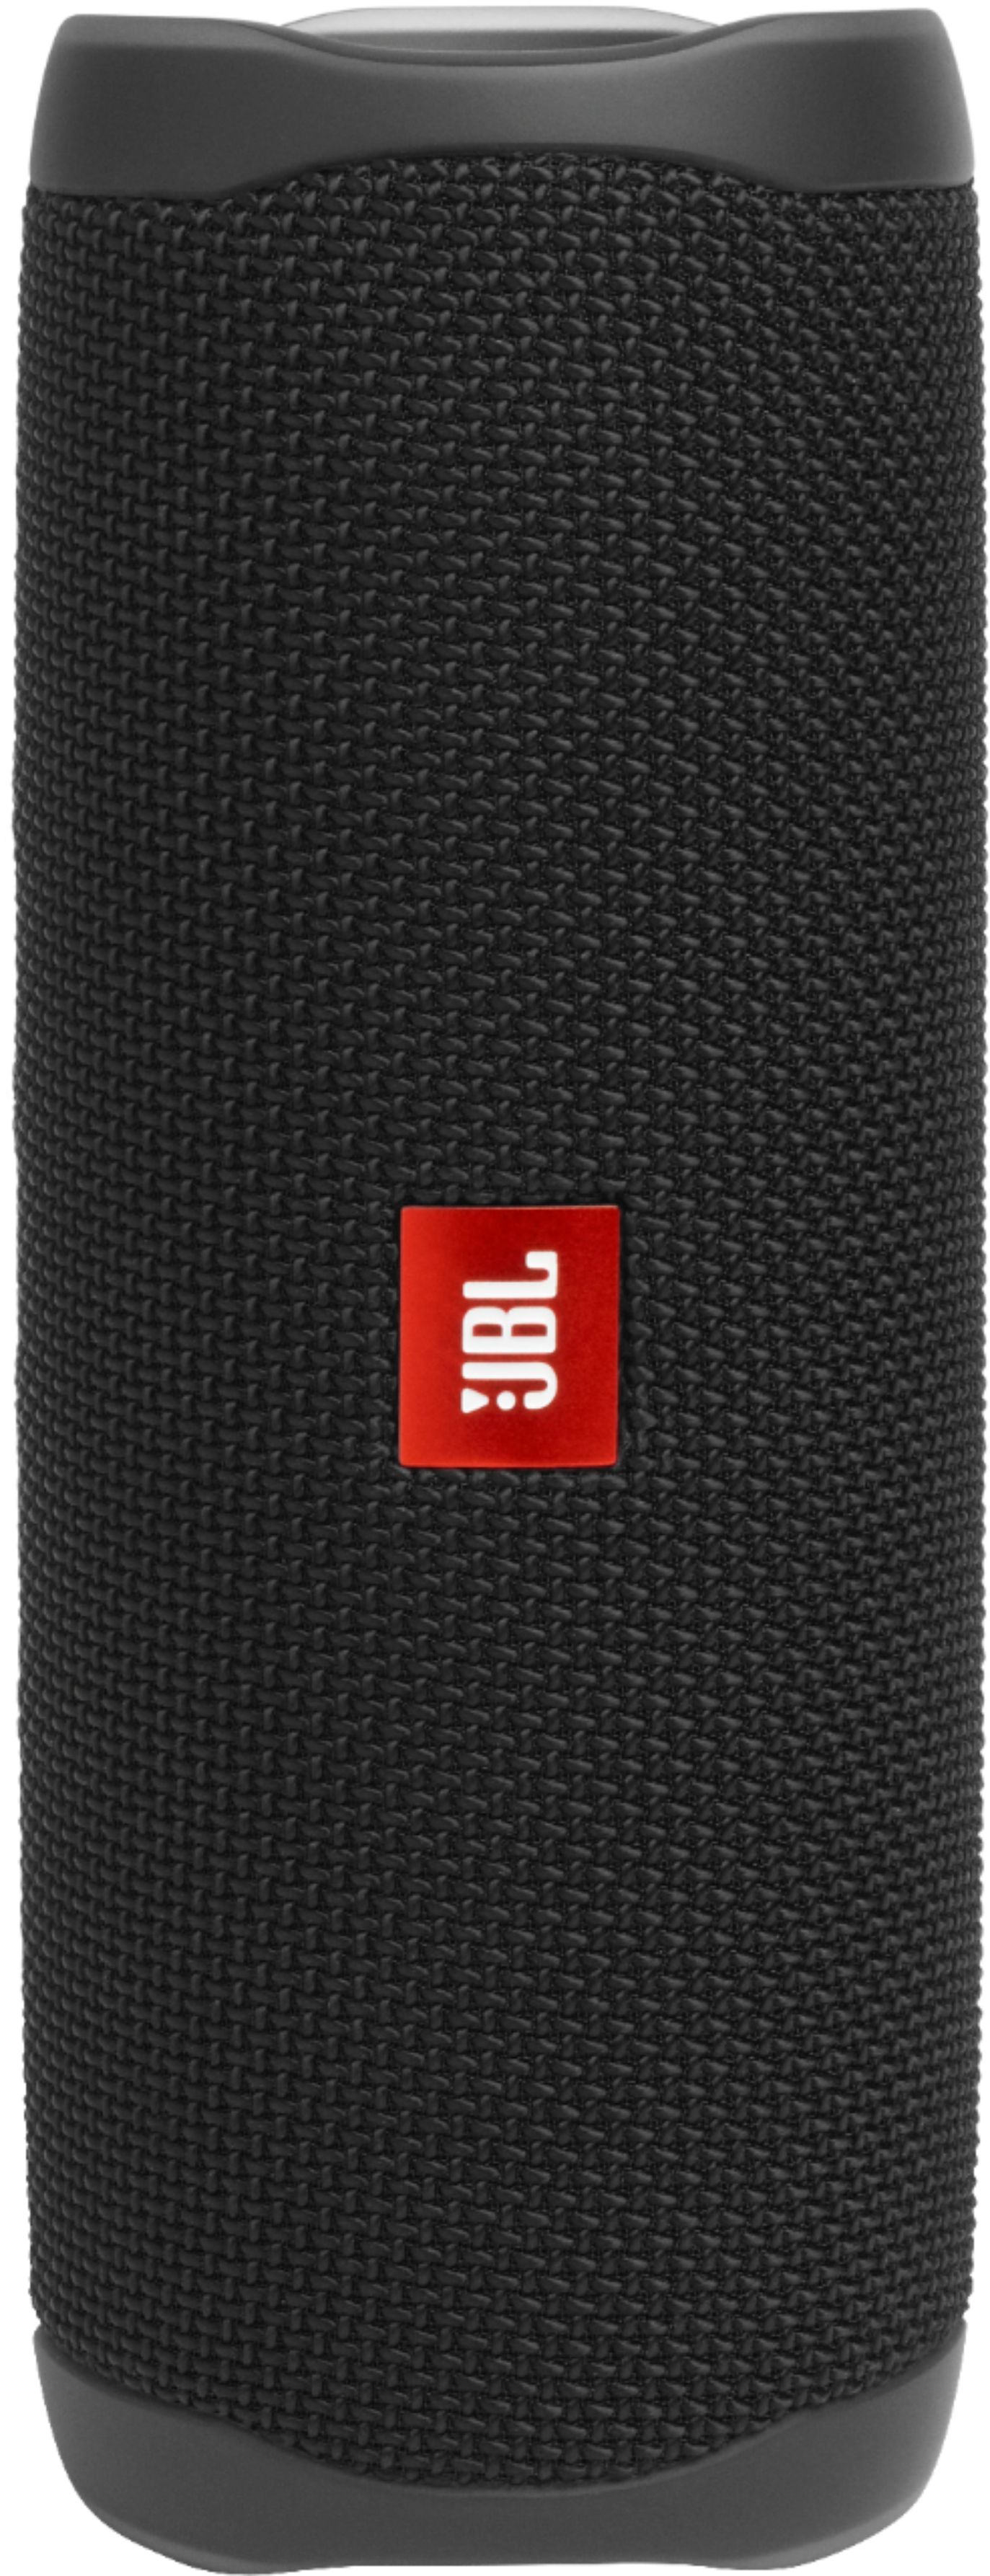 JBL Flip 4 Portable Bluetooth Speaker Gray JBLFLIP4GRYAM - Best Buy